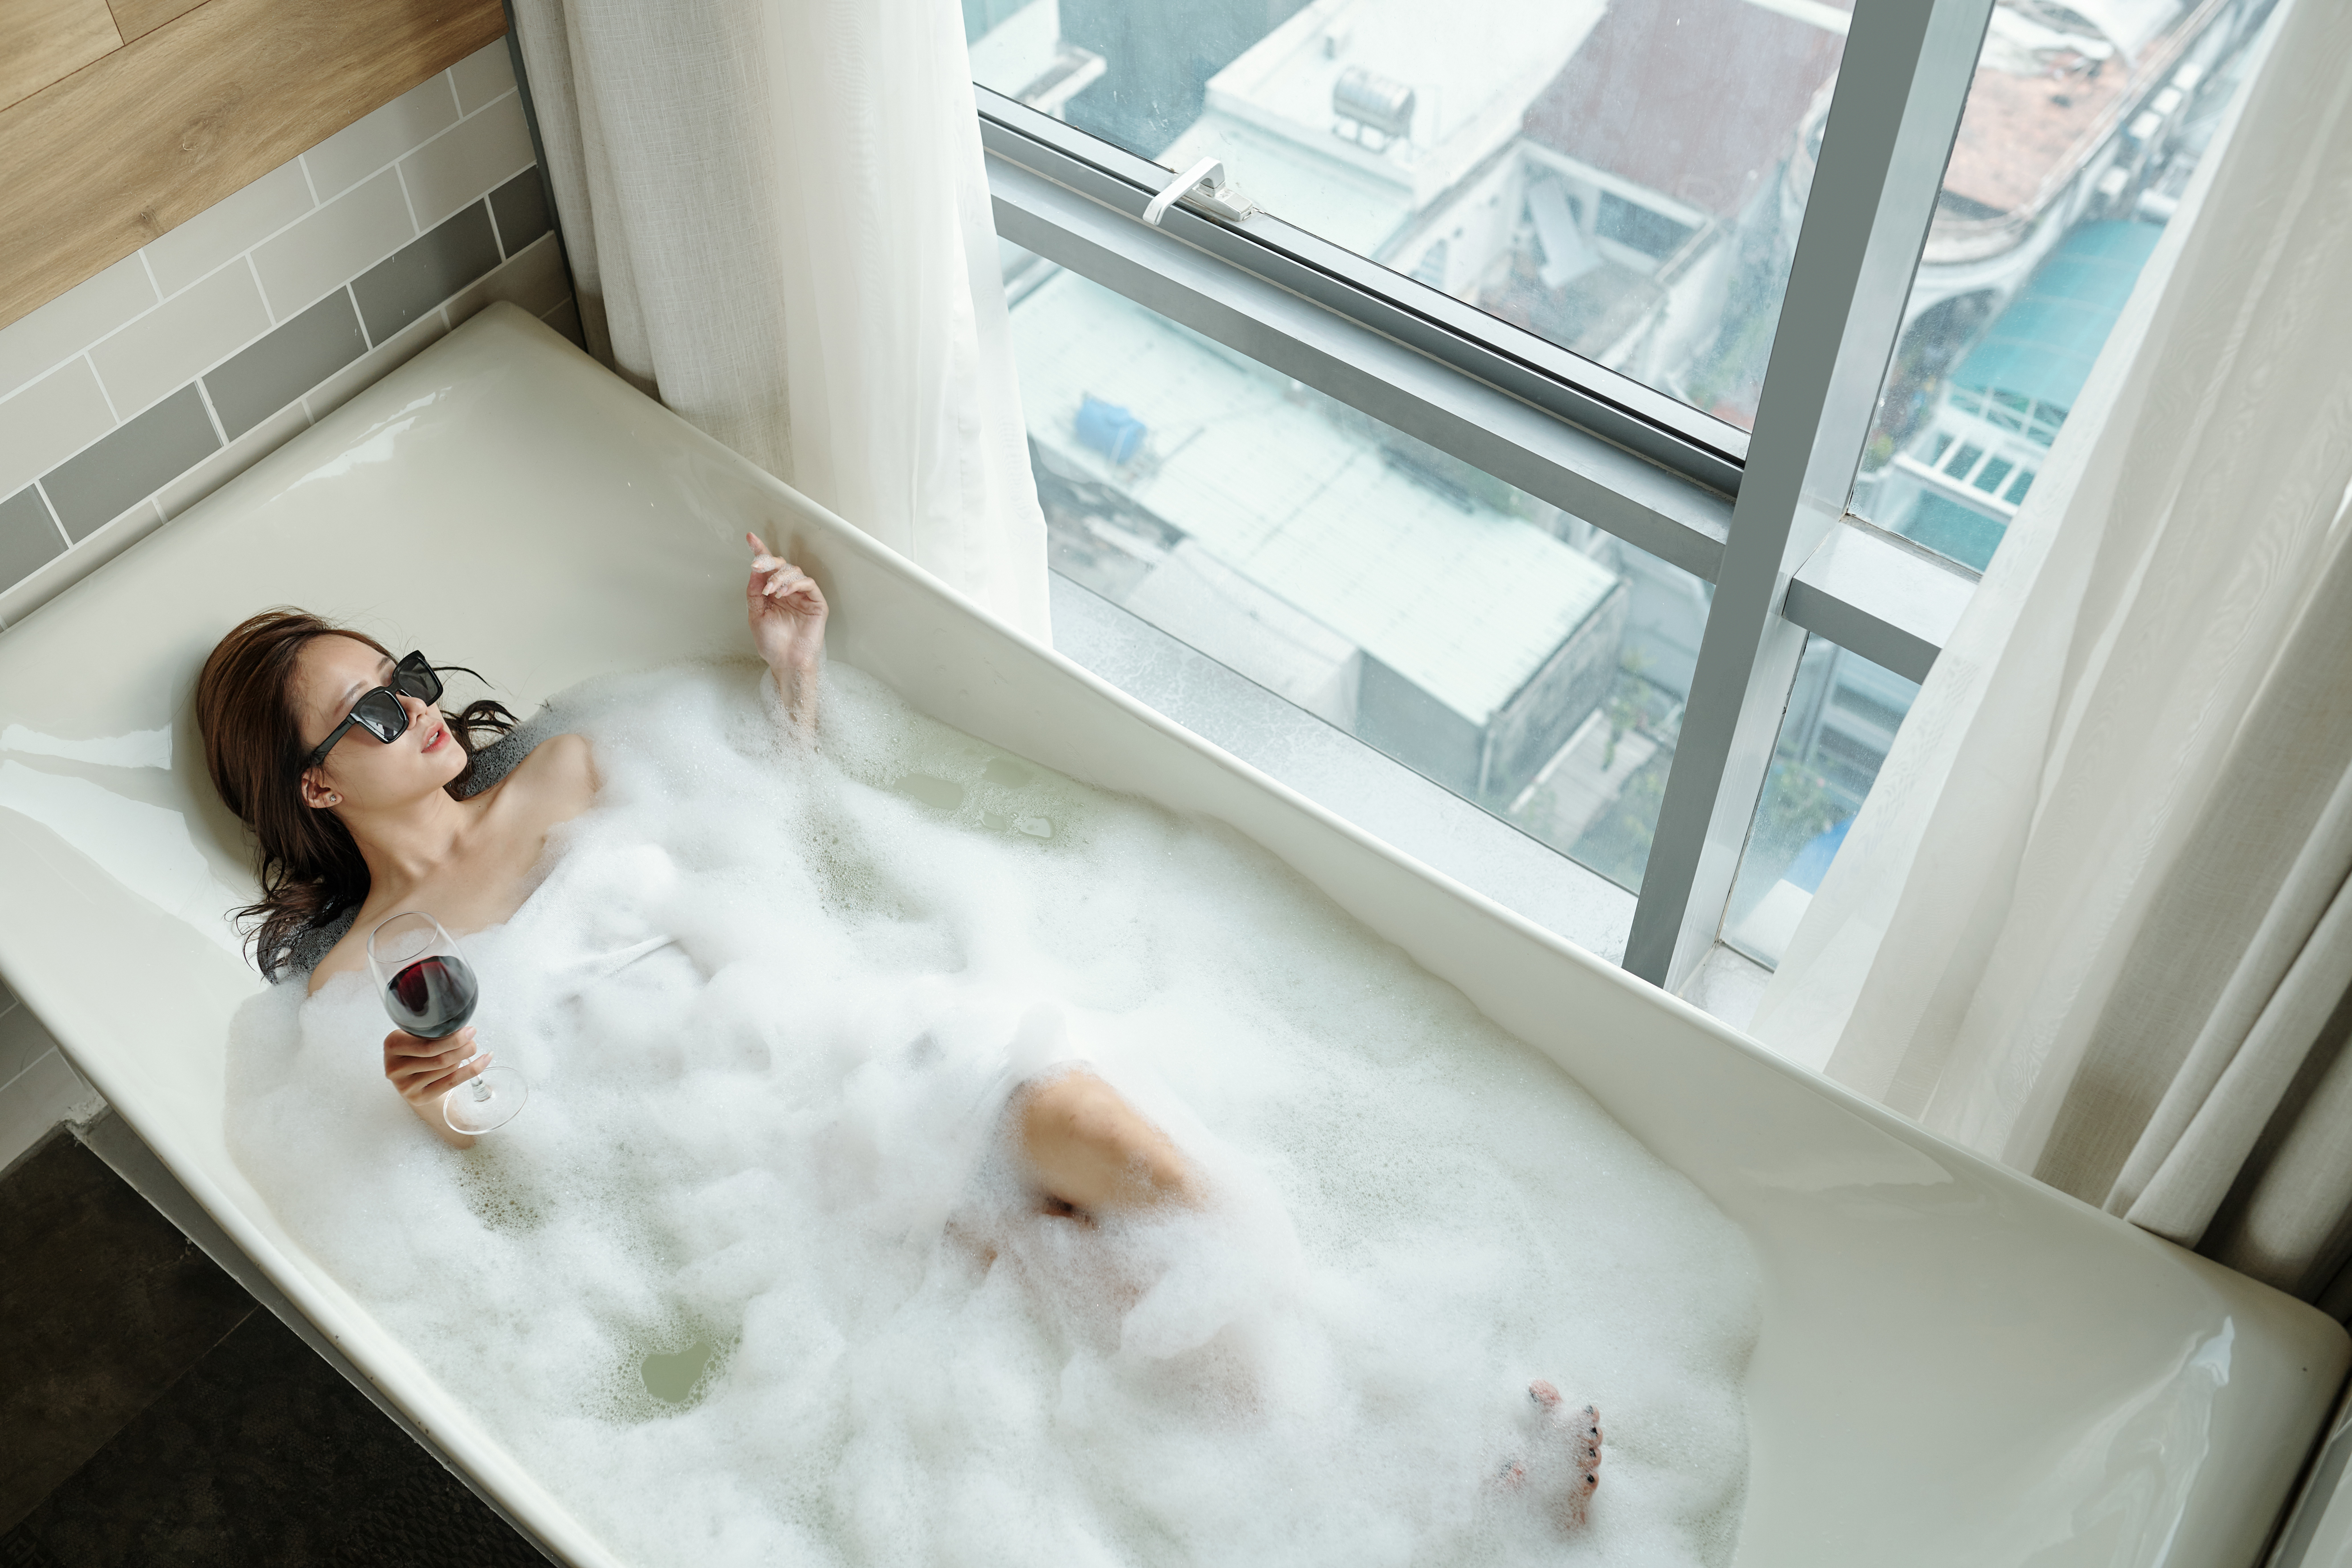 Inspiration for Your Next Bubble Bath